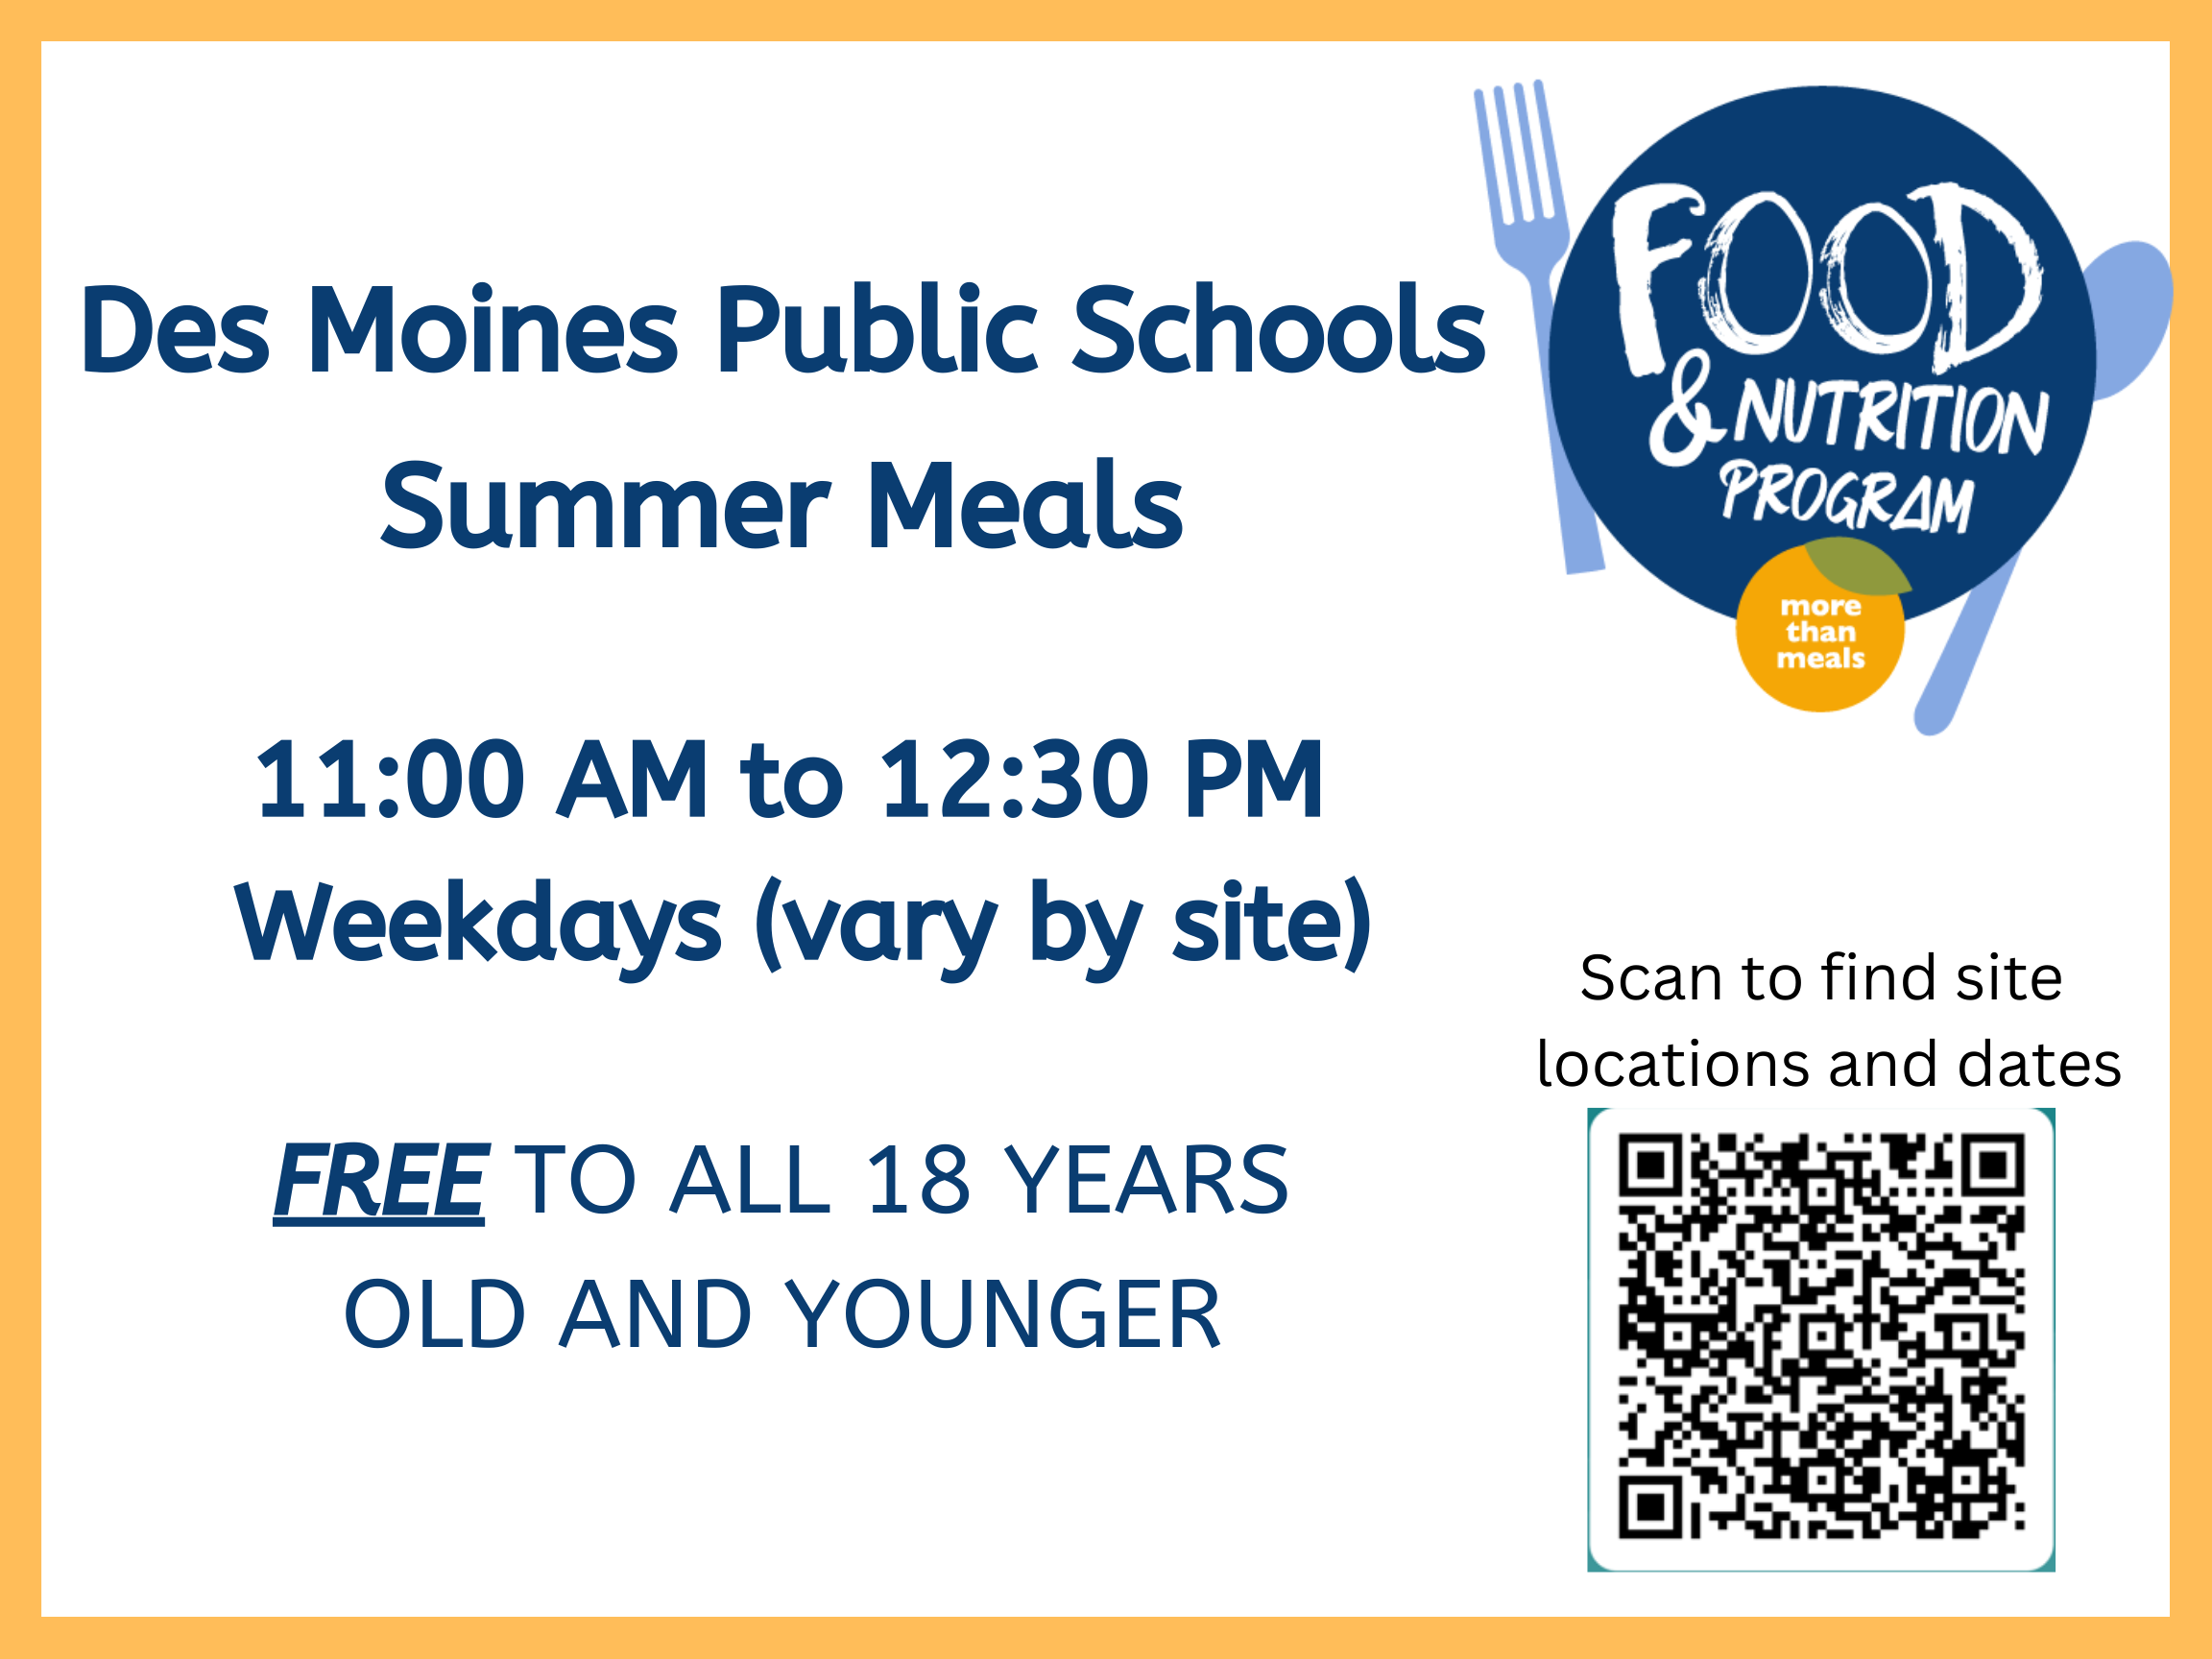 DMPS Offers Free Summer Meals at 29 Locations Des Moines Public Schools